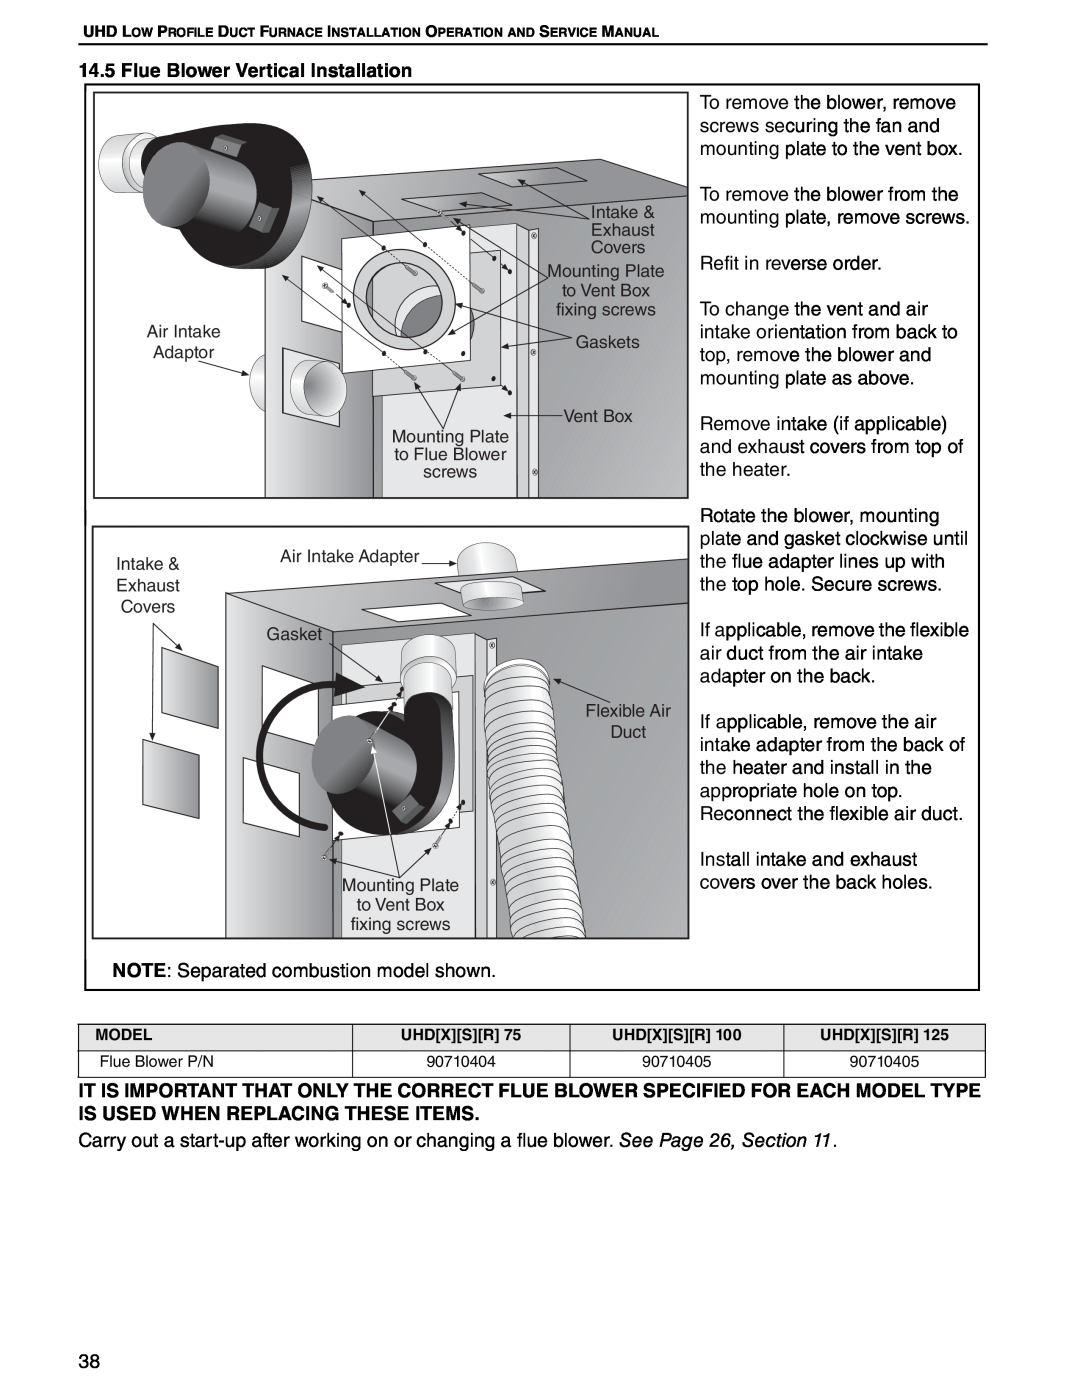 Roberts Gorden UHD[X][S][R] 75, UHD[X][S][R] 125 service manual Flue Blower Vertical Installation 